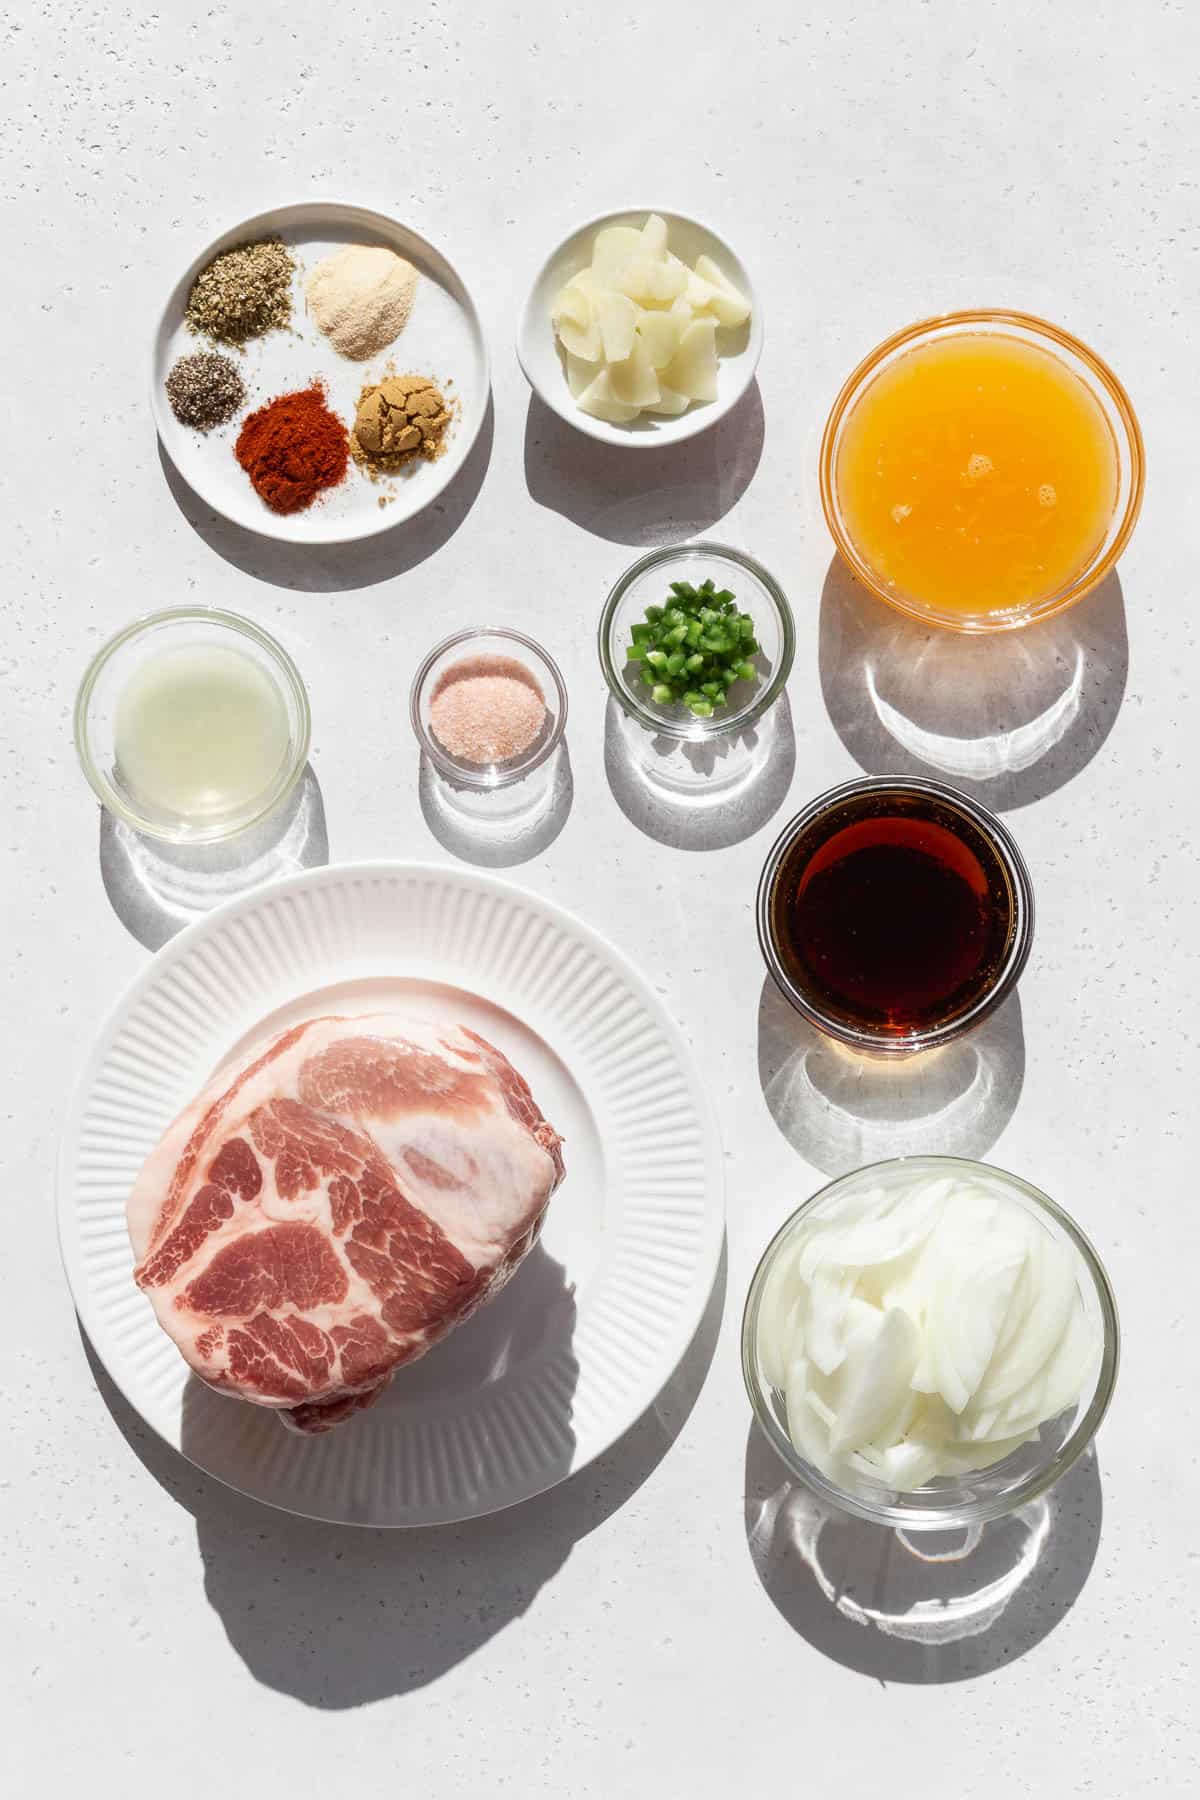 All the ingredients to make pork carnitas sitting on white countertop. 